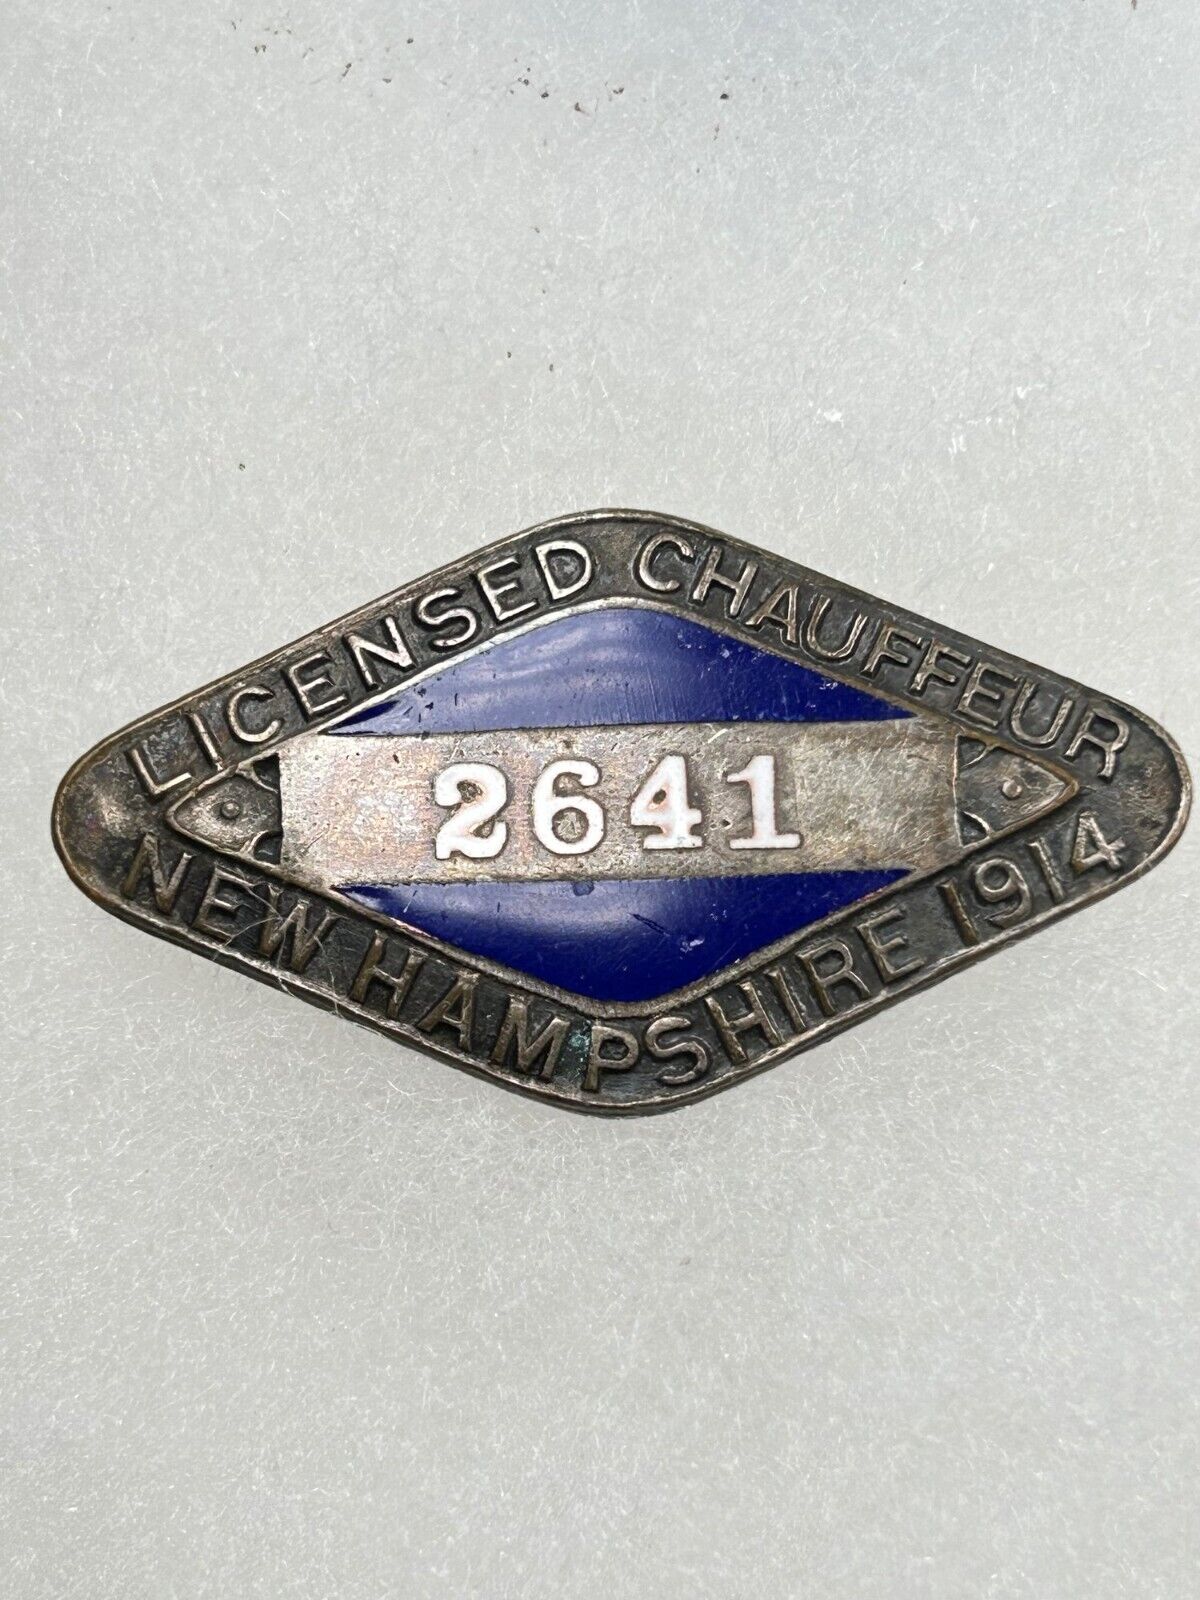 1914 NEW HAMPSHIRE CHAUFFEUR / DRIVER BADGE #2641